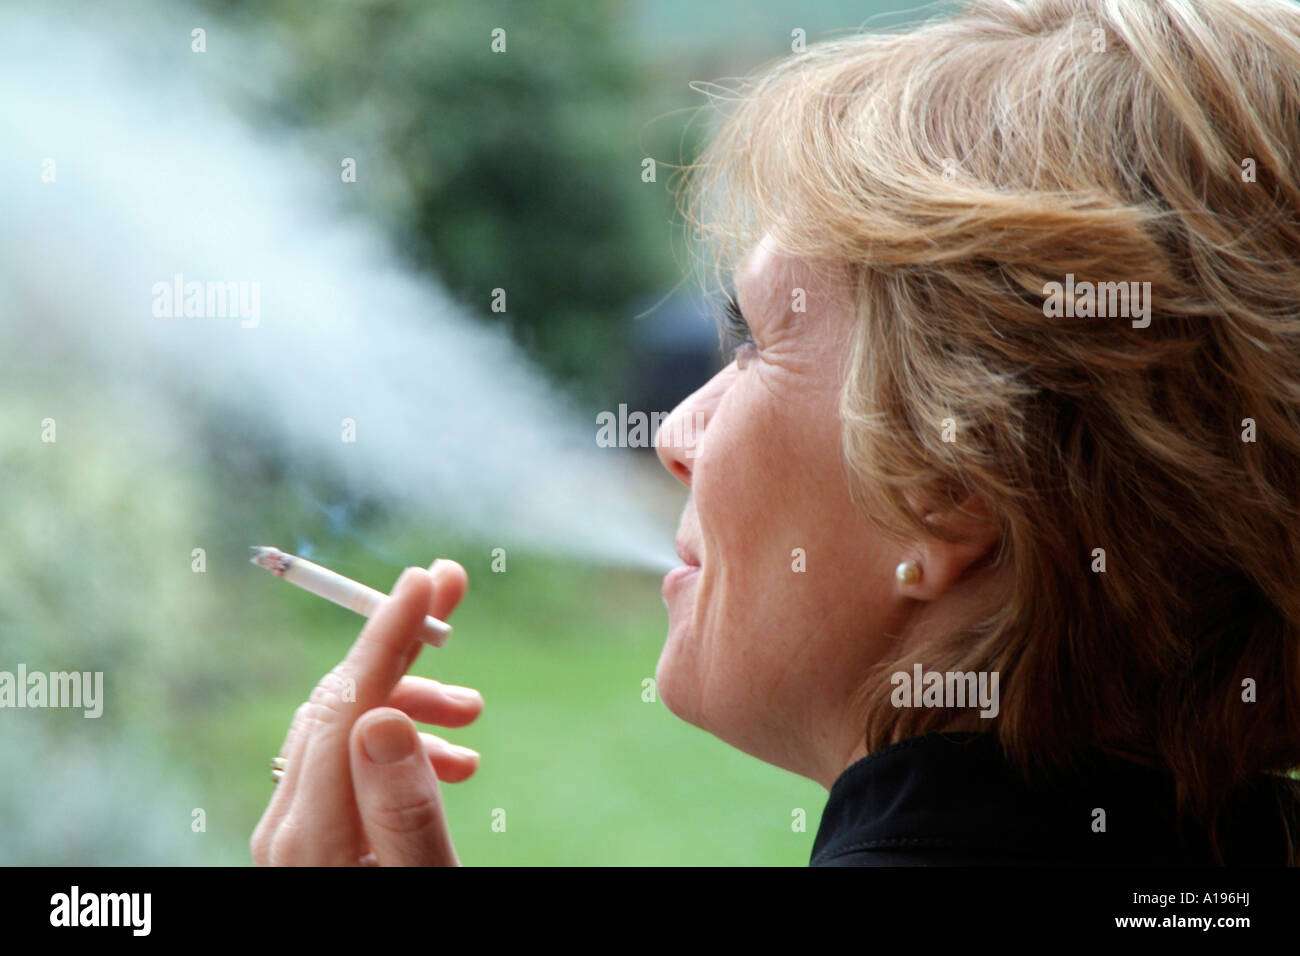 Woman smoking a cigarette Exhaling tobacco smoke Stock Photo